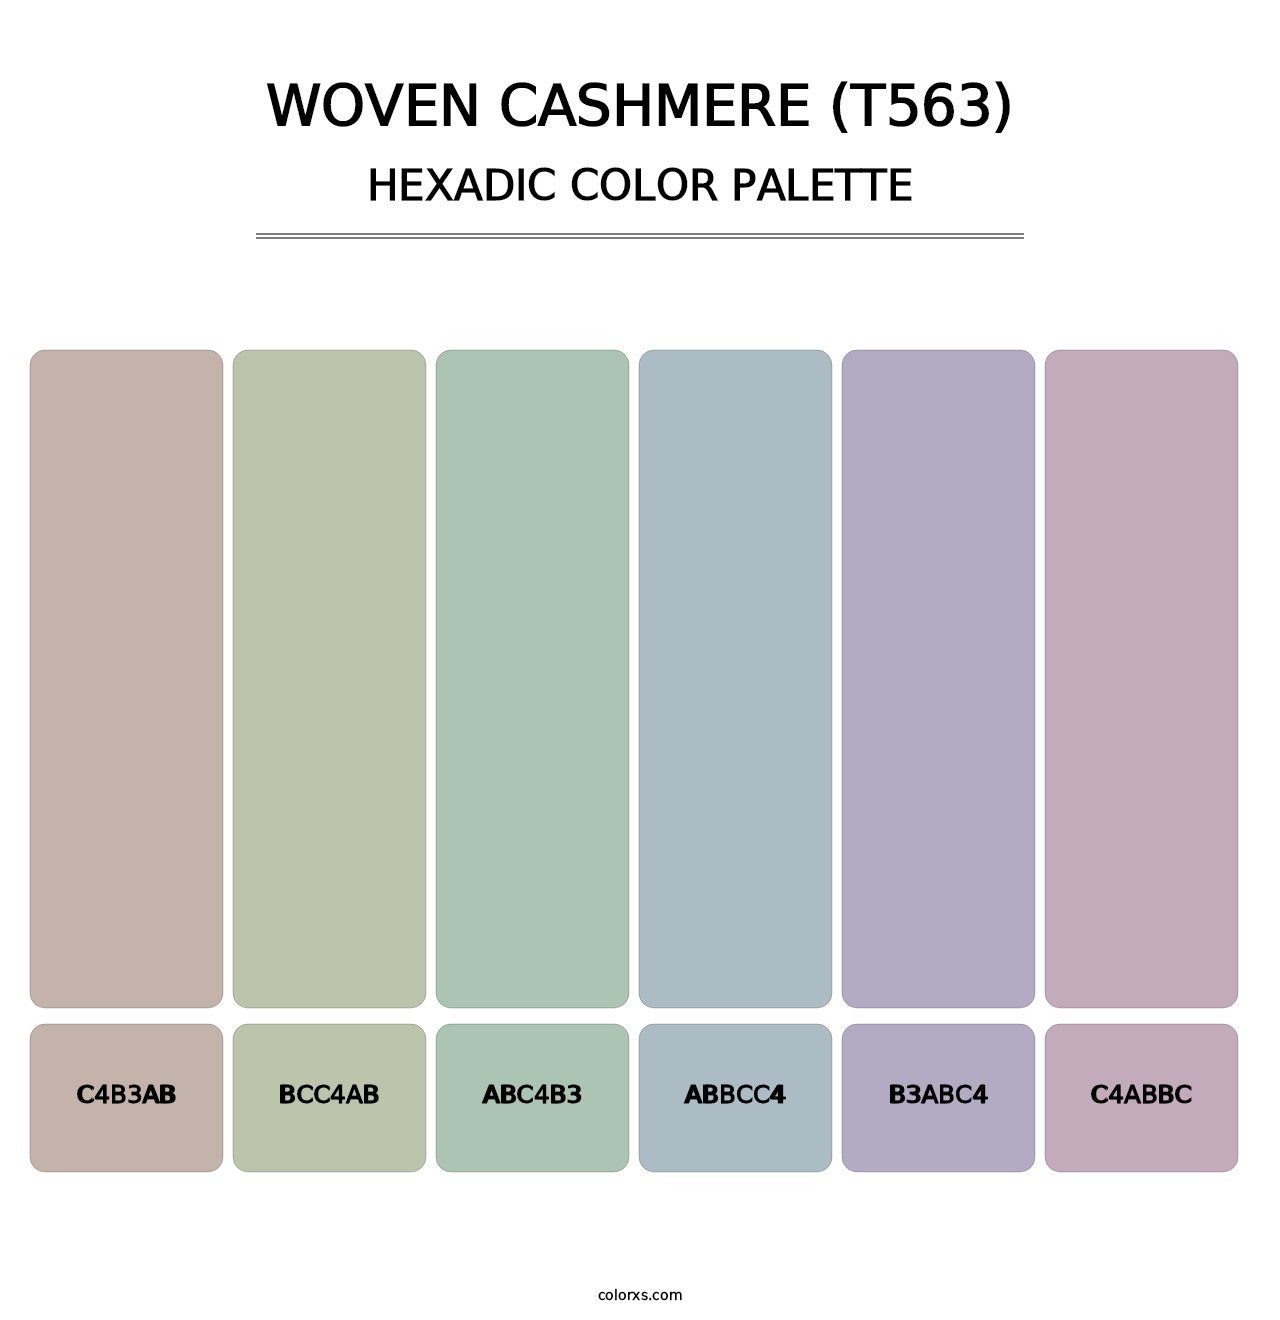 Woven Cashmere (T563) - Hexadic Color Palette